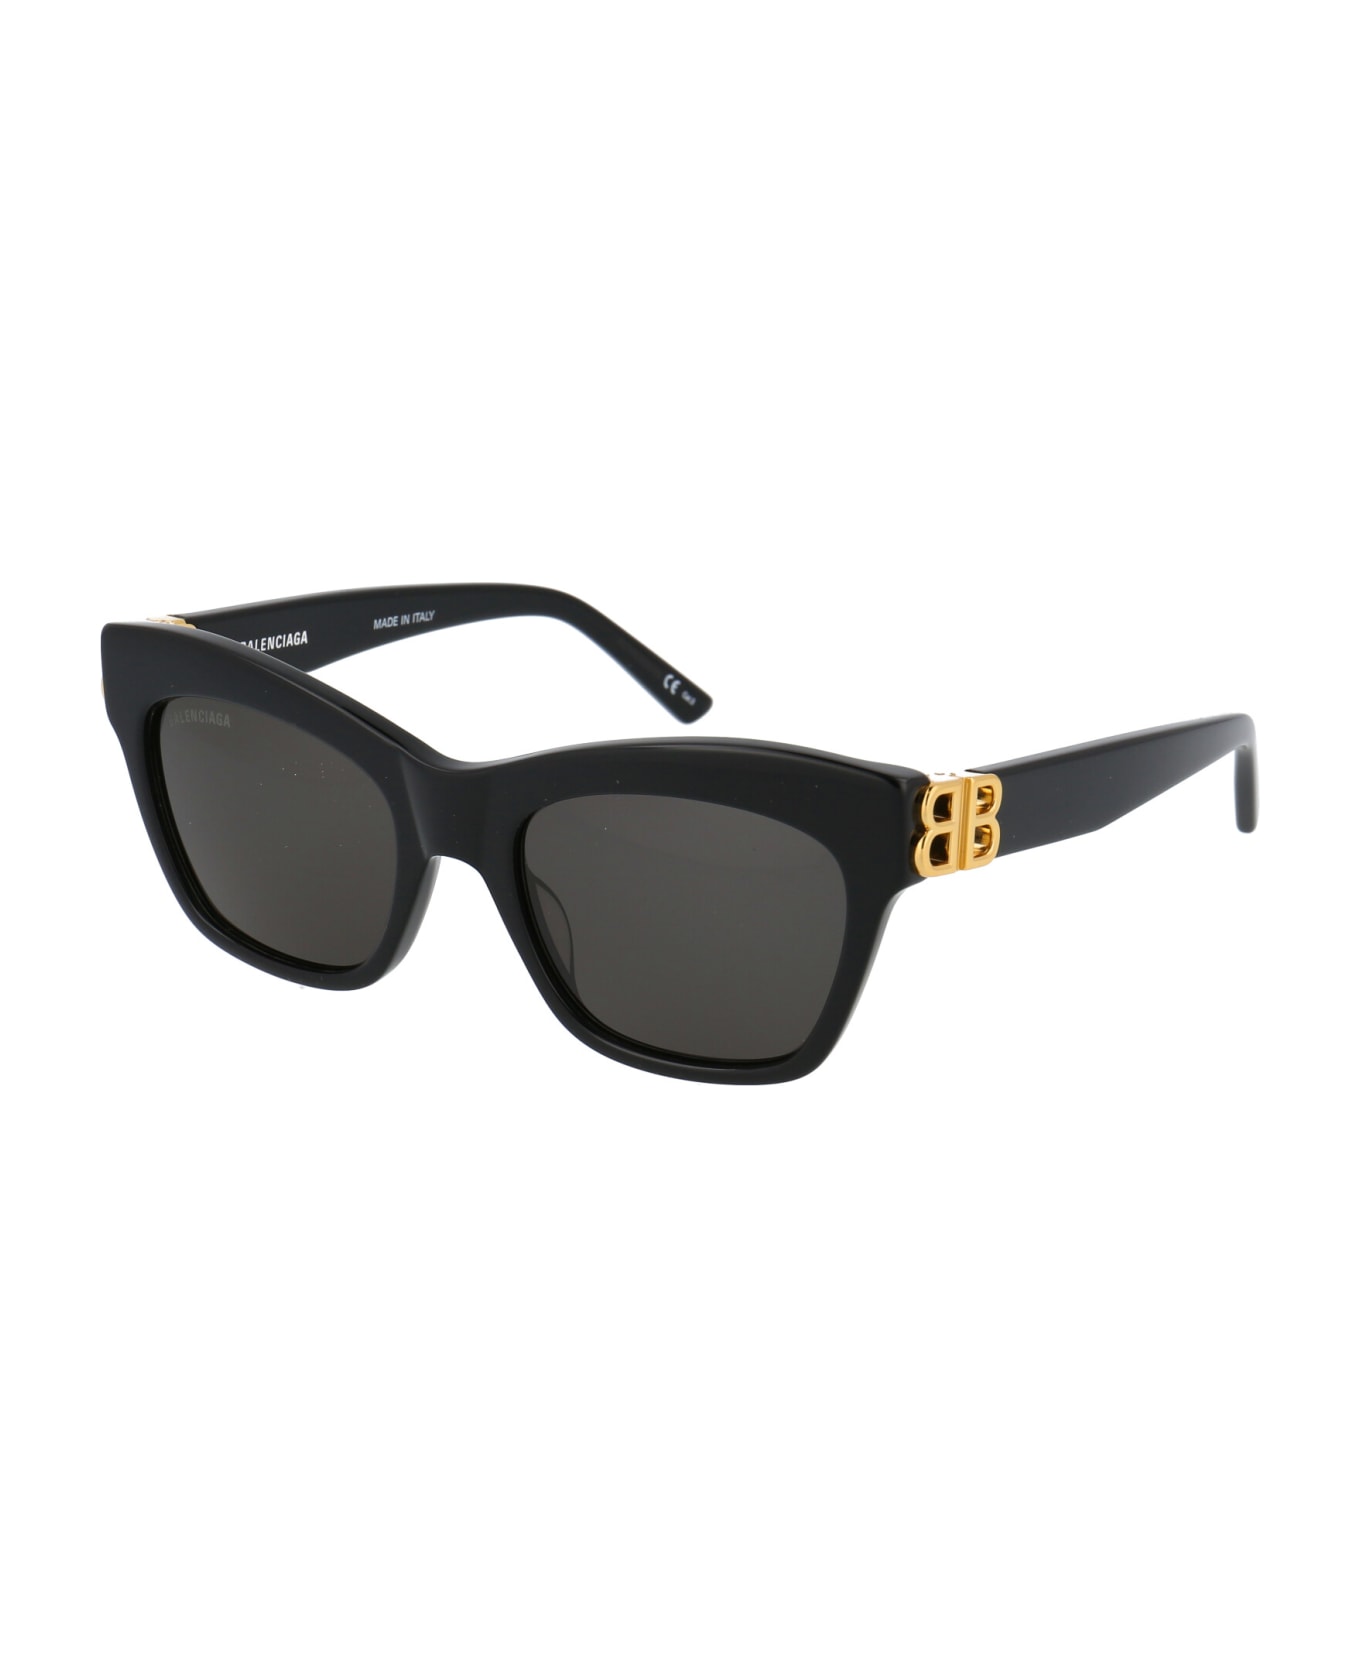 Balenciaga Eyewear Bb0132s Sunglasses - 001 BLACK GOLD GREY